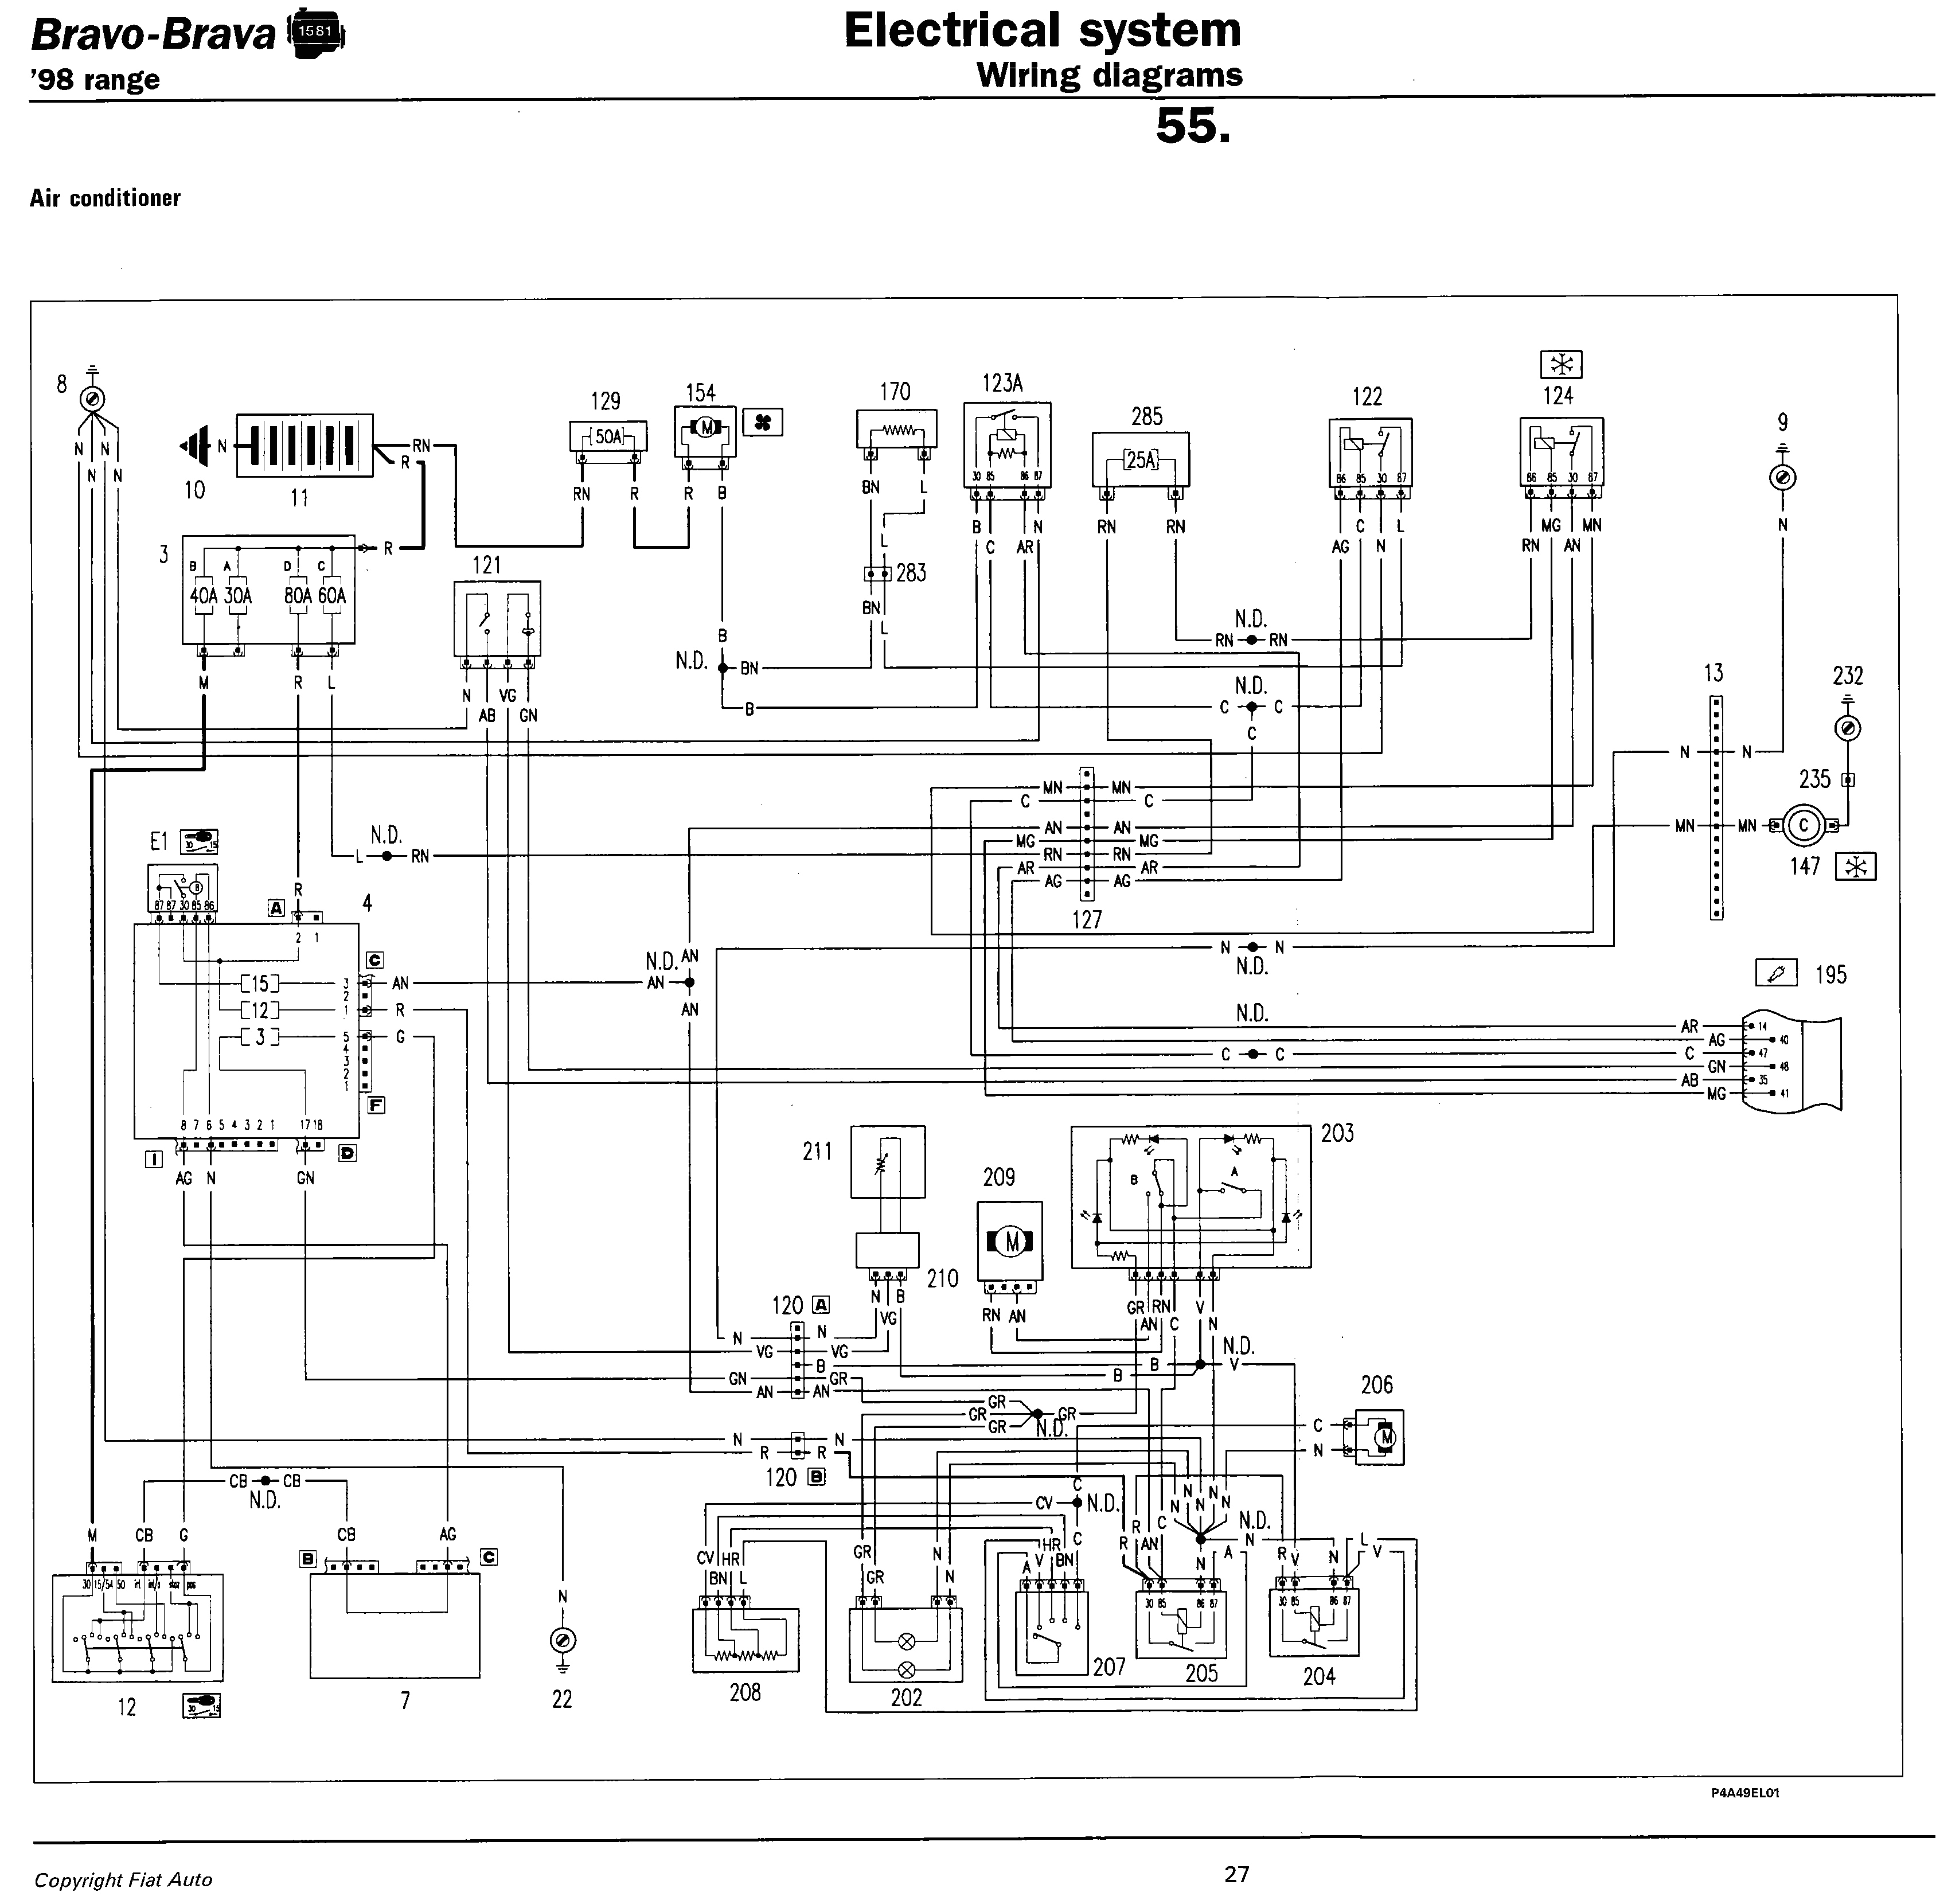 2012 fiat fuse box diagram wiring schematic